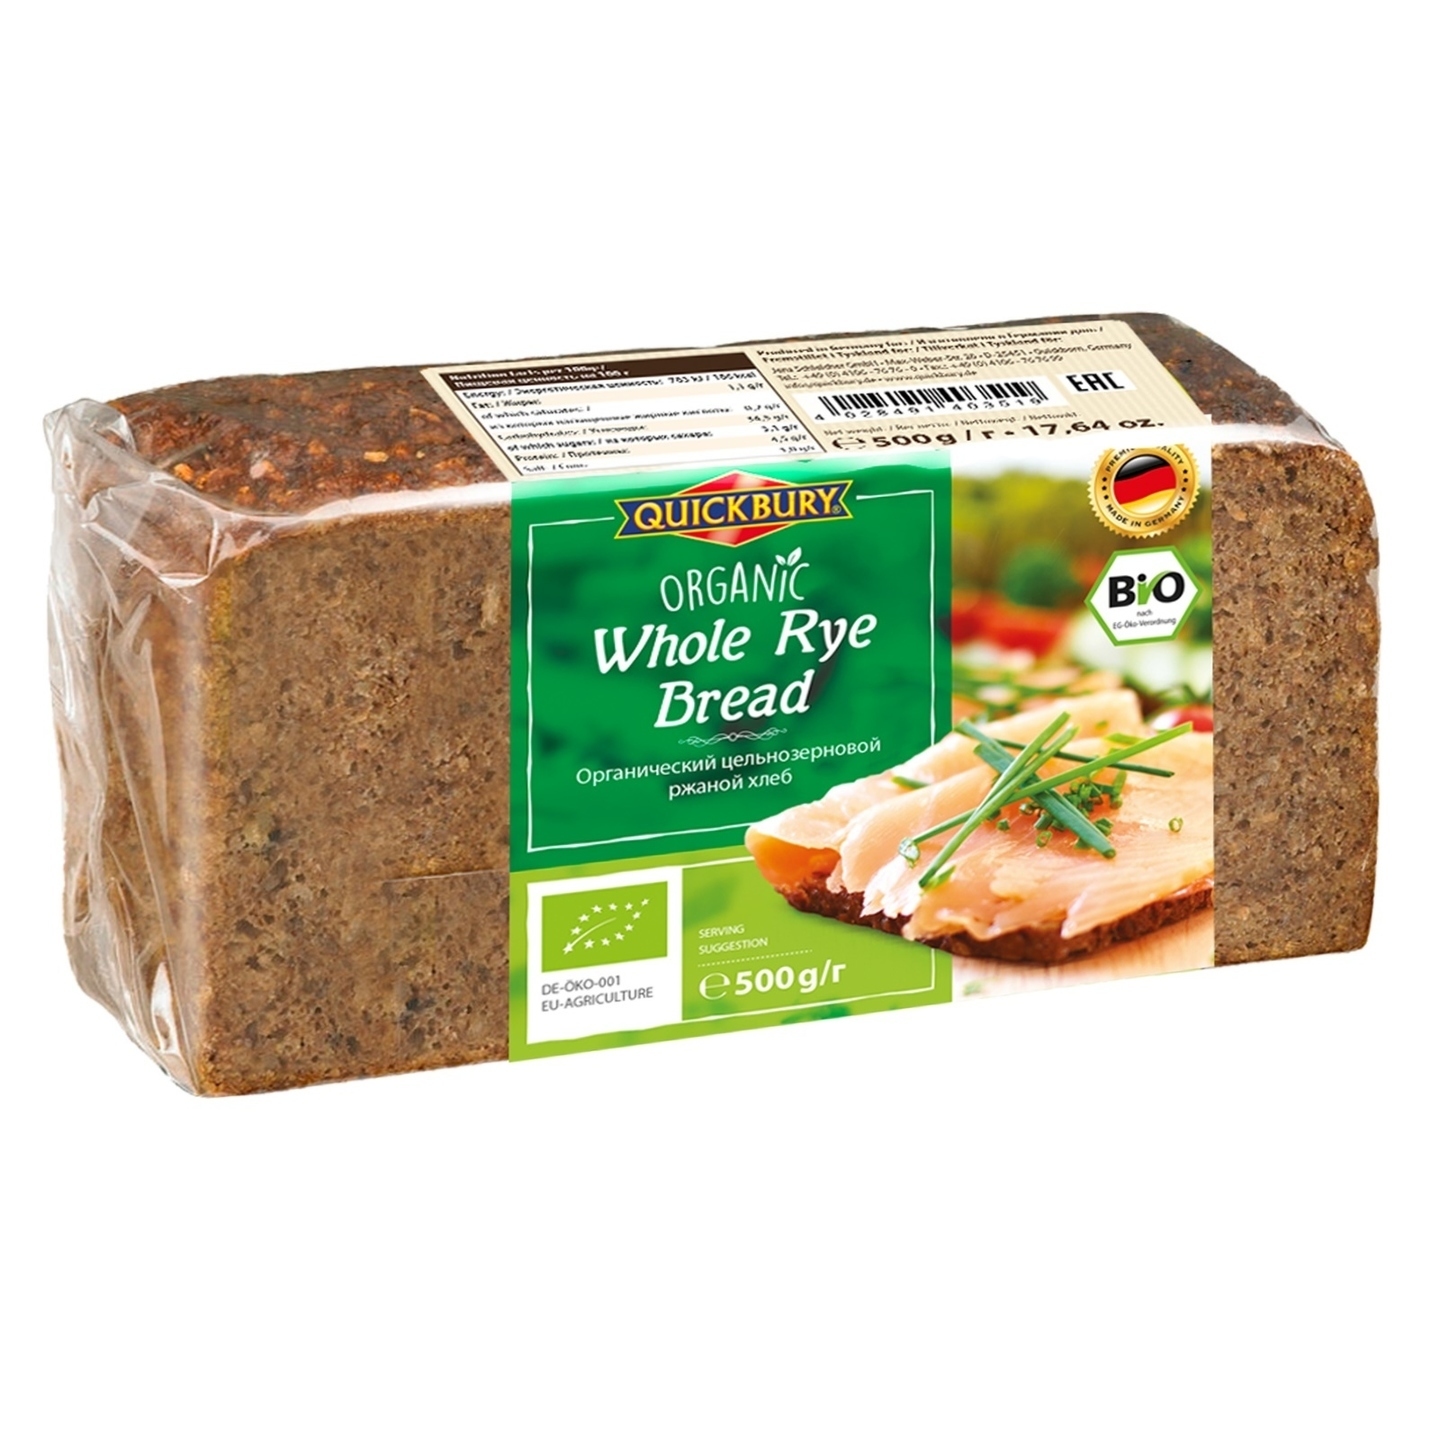 Quickbury Organic Whole Rye Bread